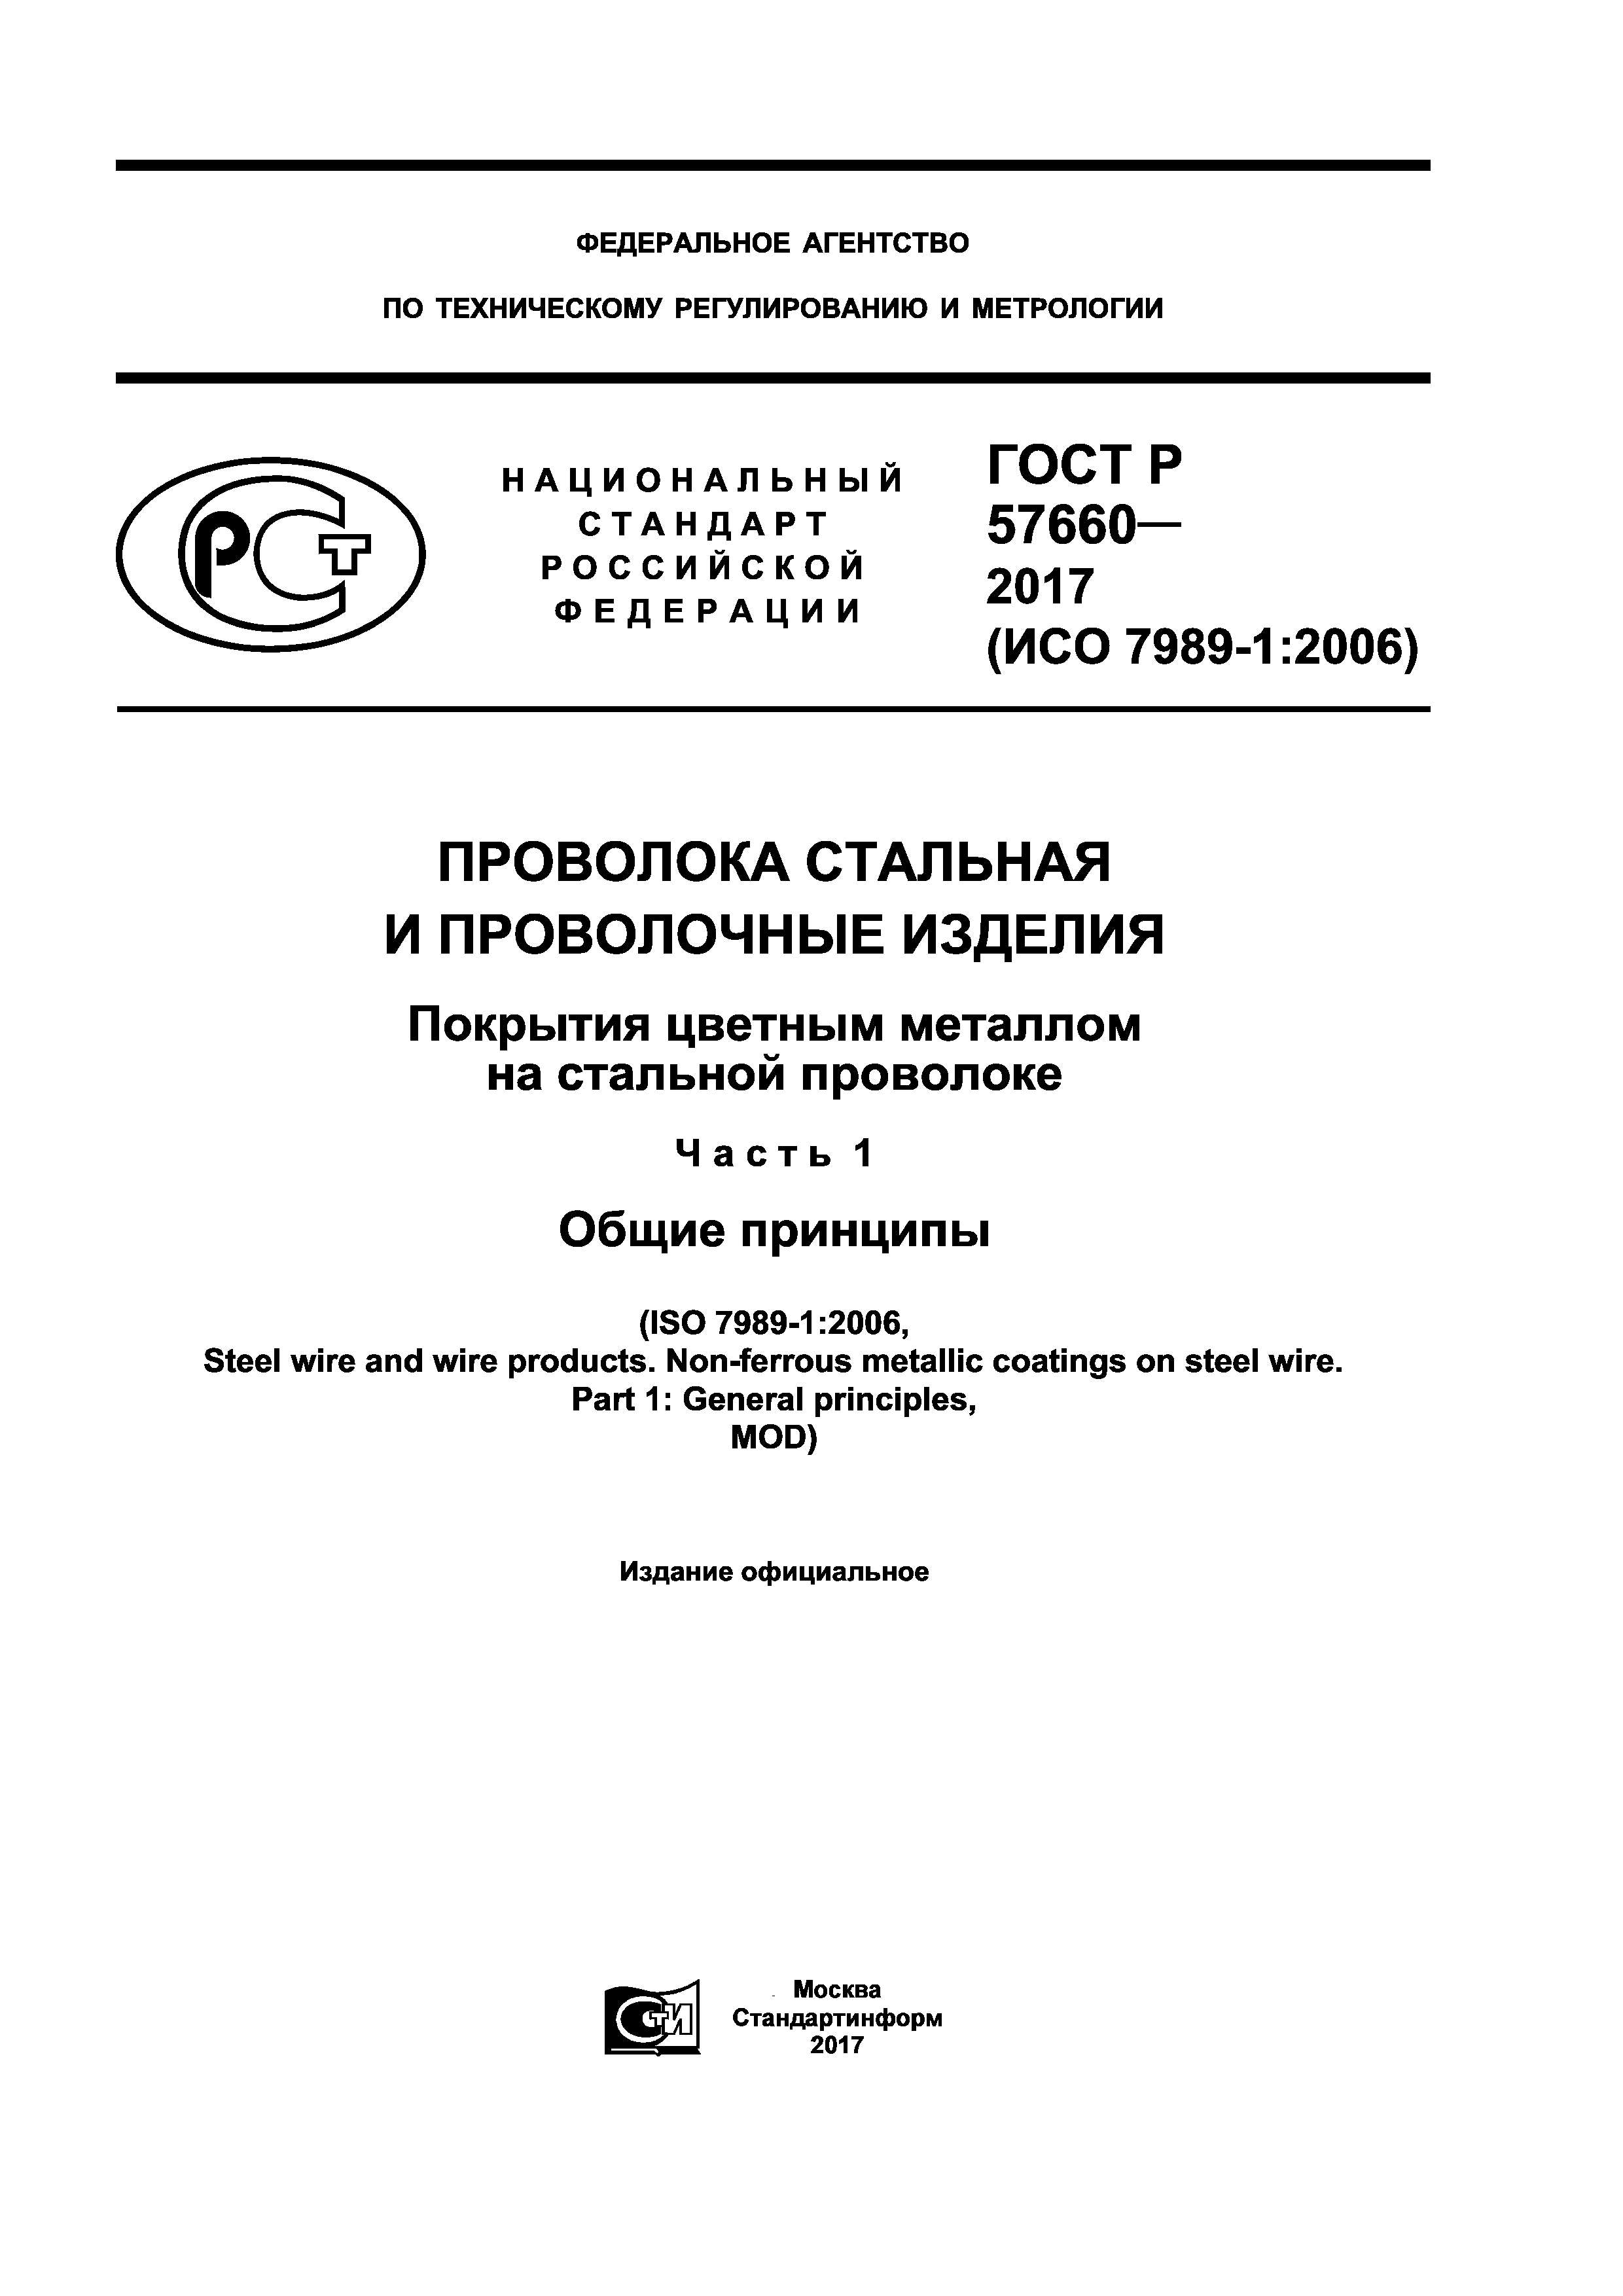 ГОСТ Р 57660-2017